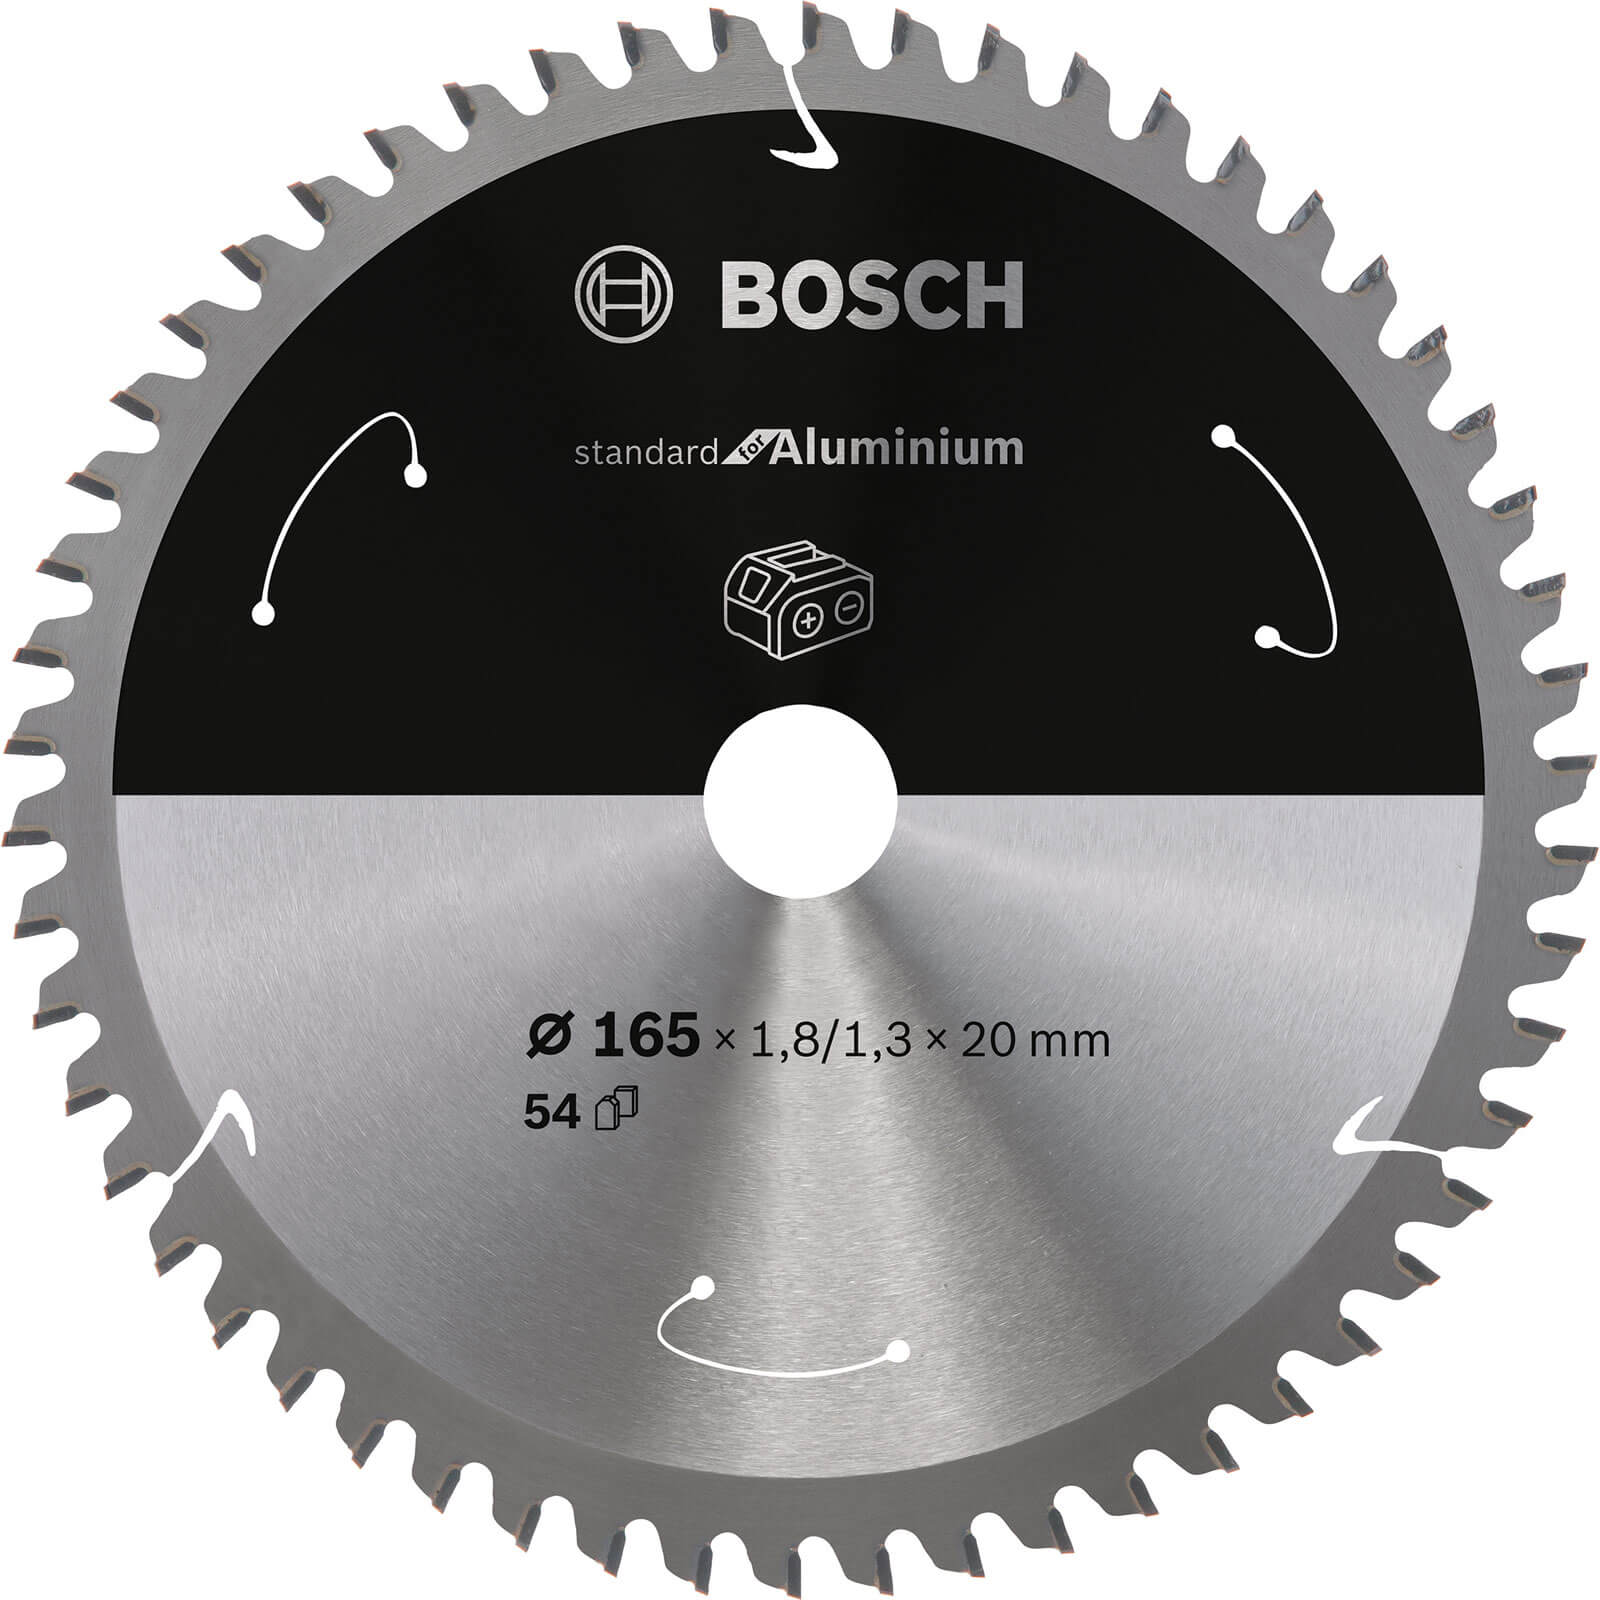 Photos - Power Tool Accessory Bosch Cordless Circular Saw Blade for Aluminium 165mm 54T 20mm 2608837763 